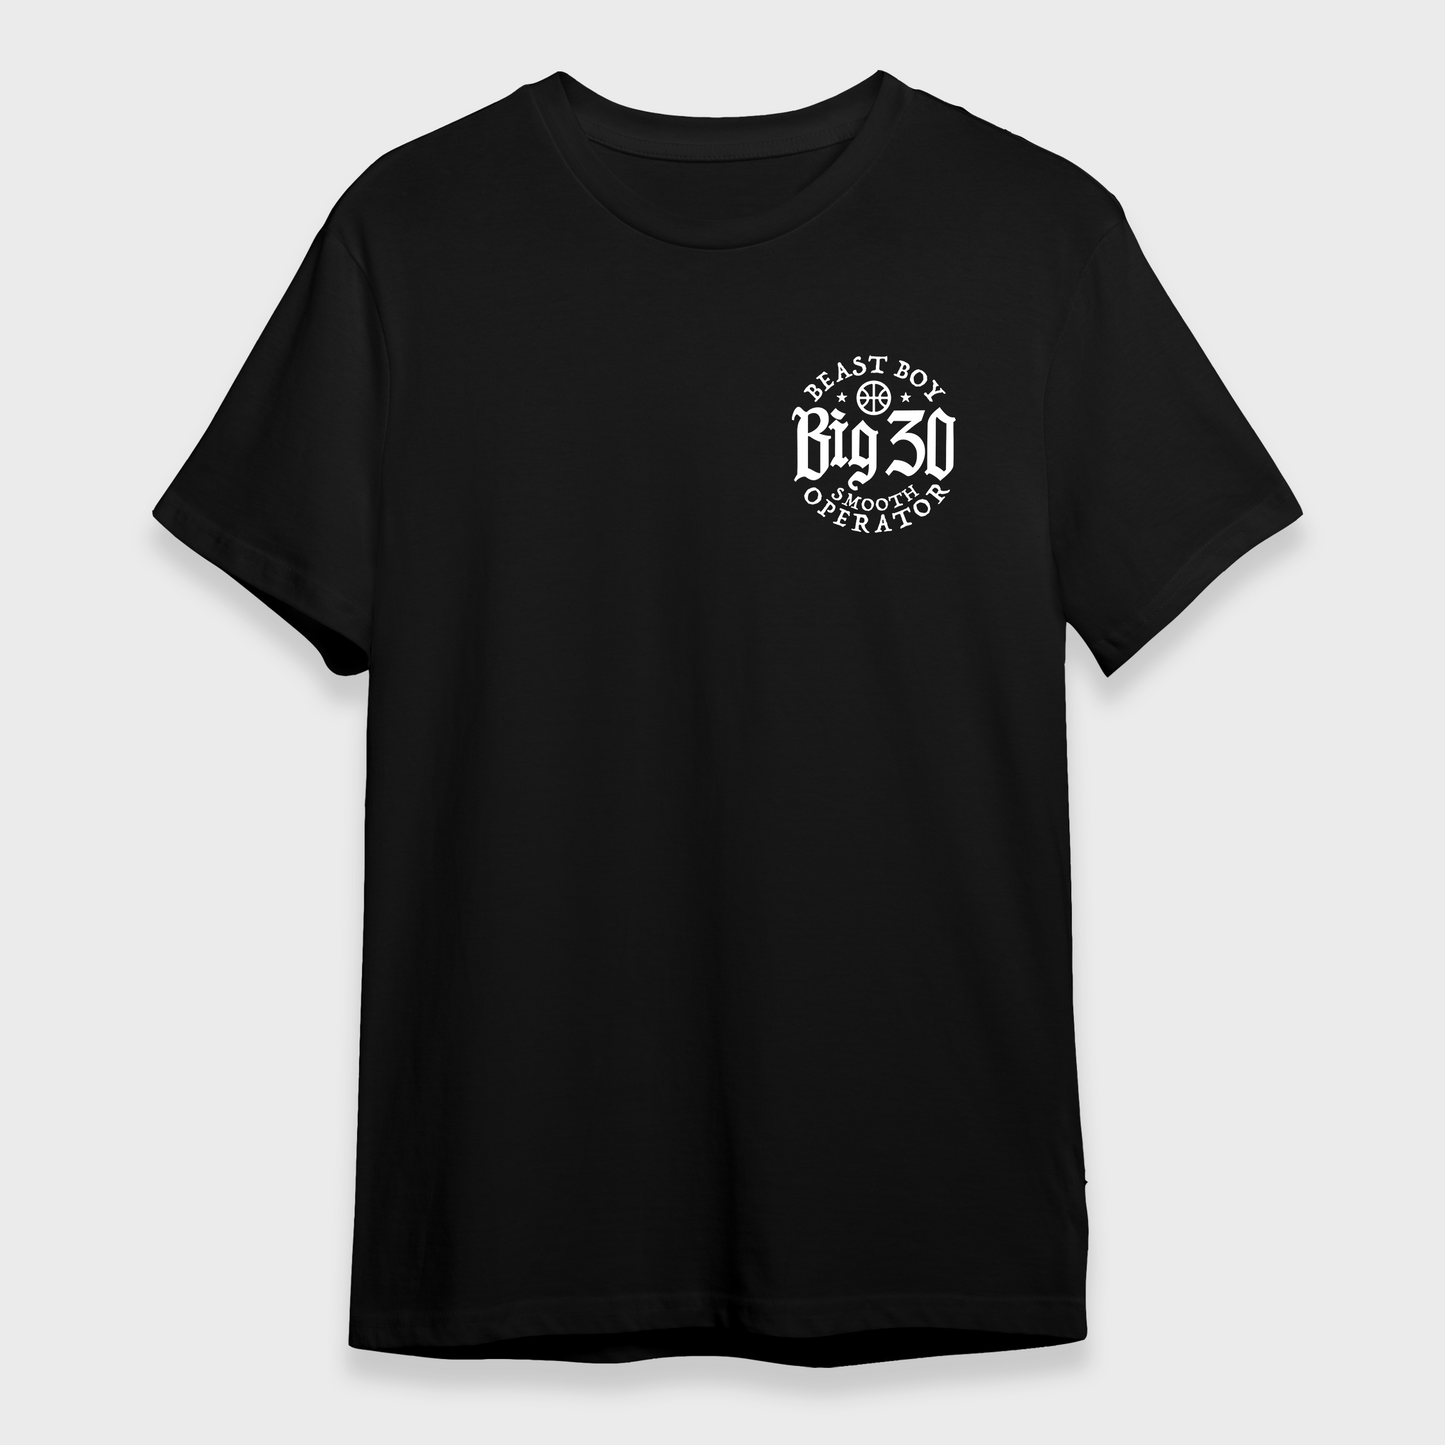 DJ Burns Jr Big 30 Logo Tee (Black)